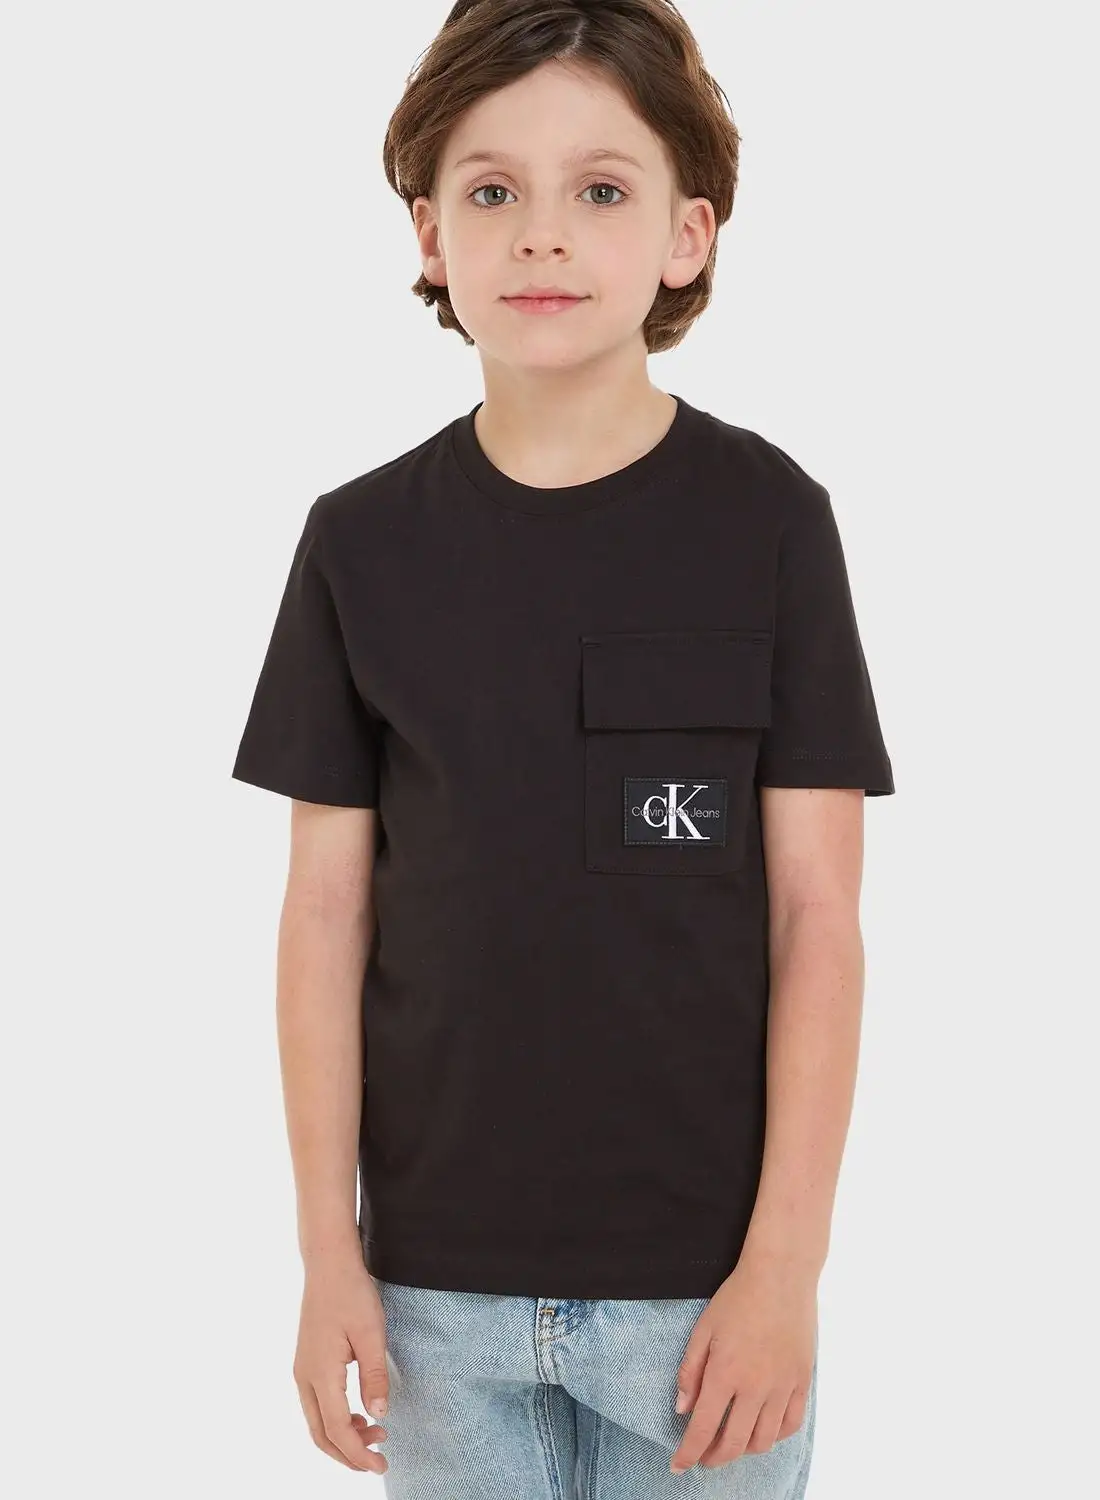 Calvin Klein Jeans Kids Logo T-Shirt